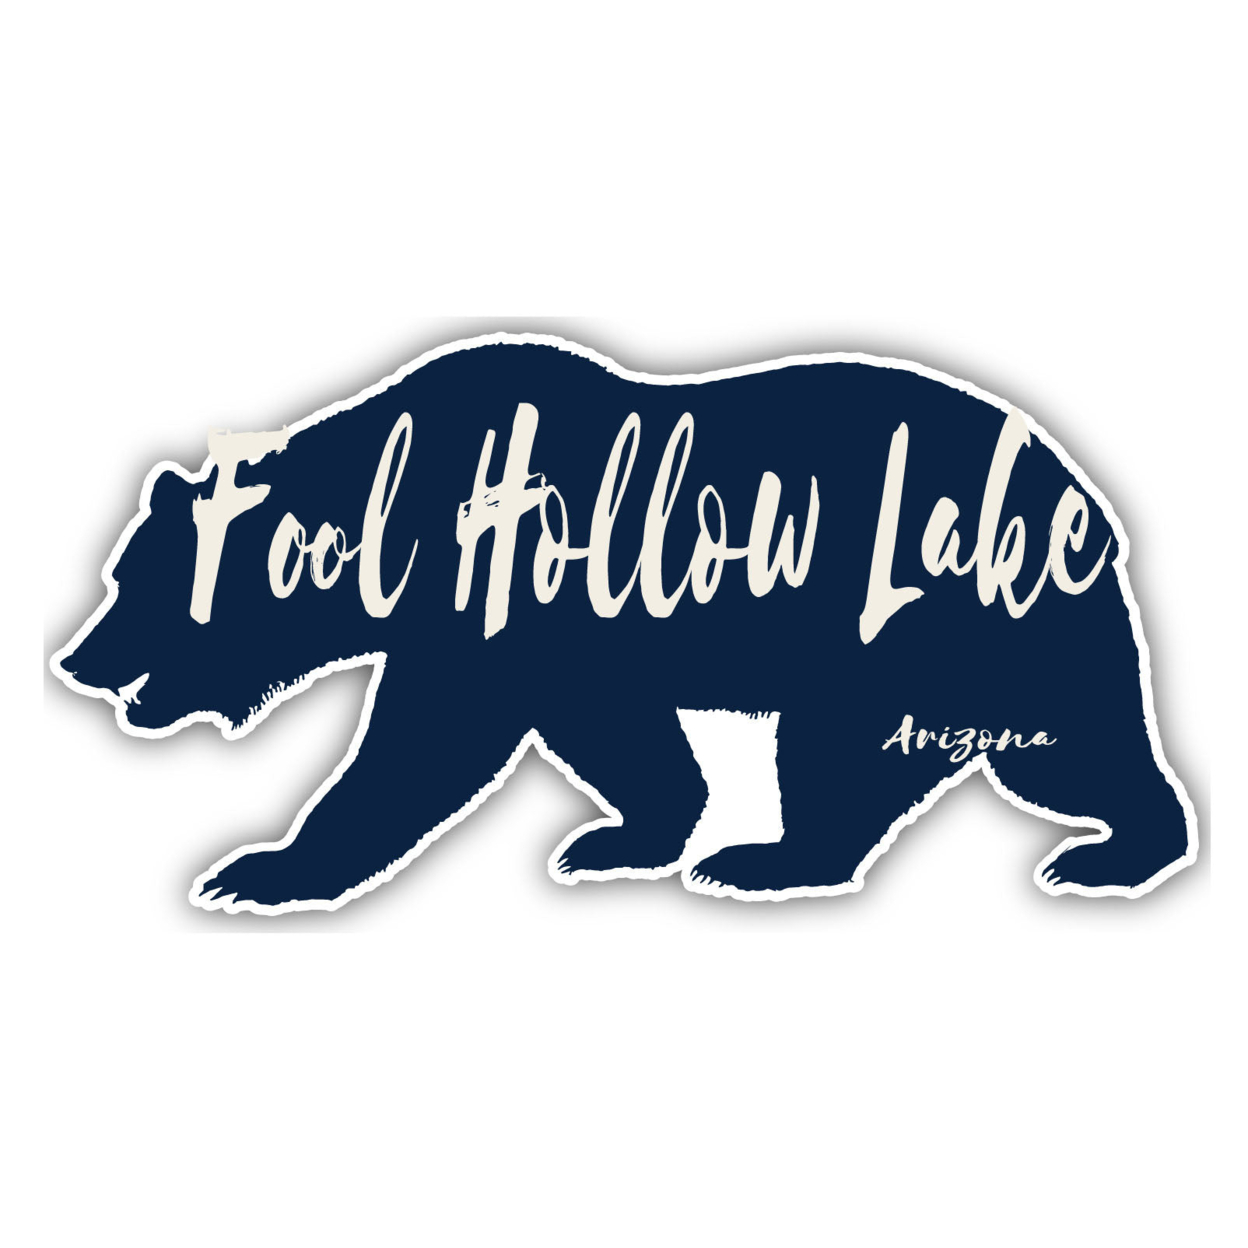 Fool Hollow Lake Arizona Souvenir Decorative Stickers (Choose Theme And Size) - Single Unit, 2-Inch, Tent